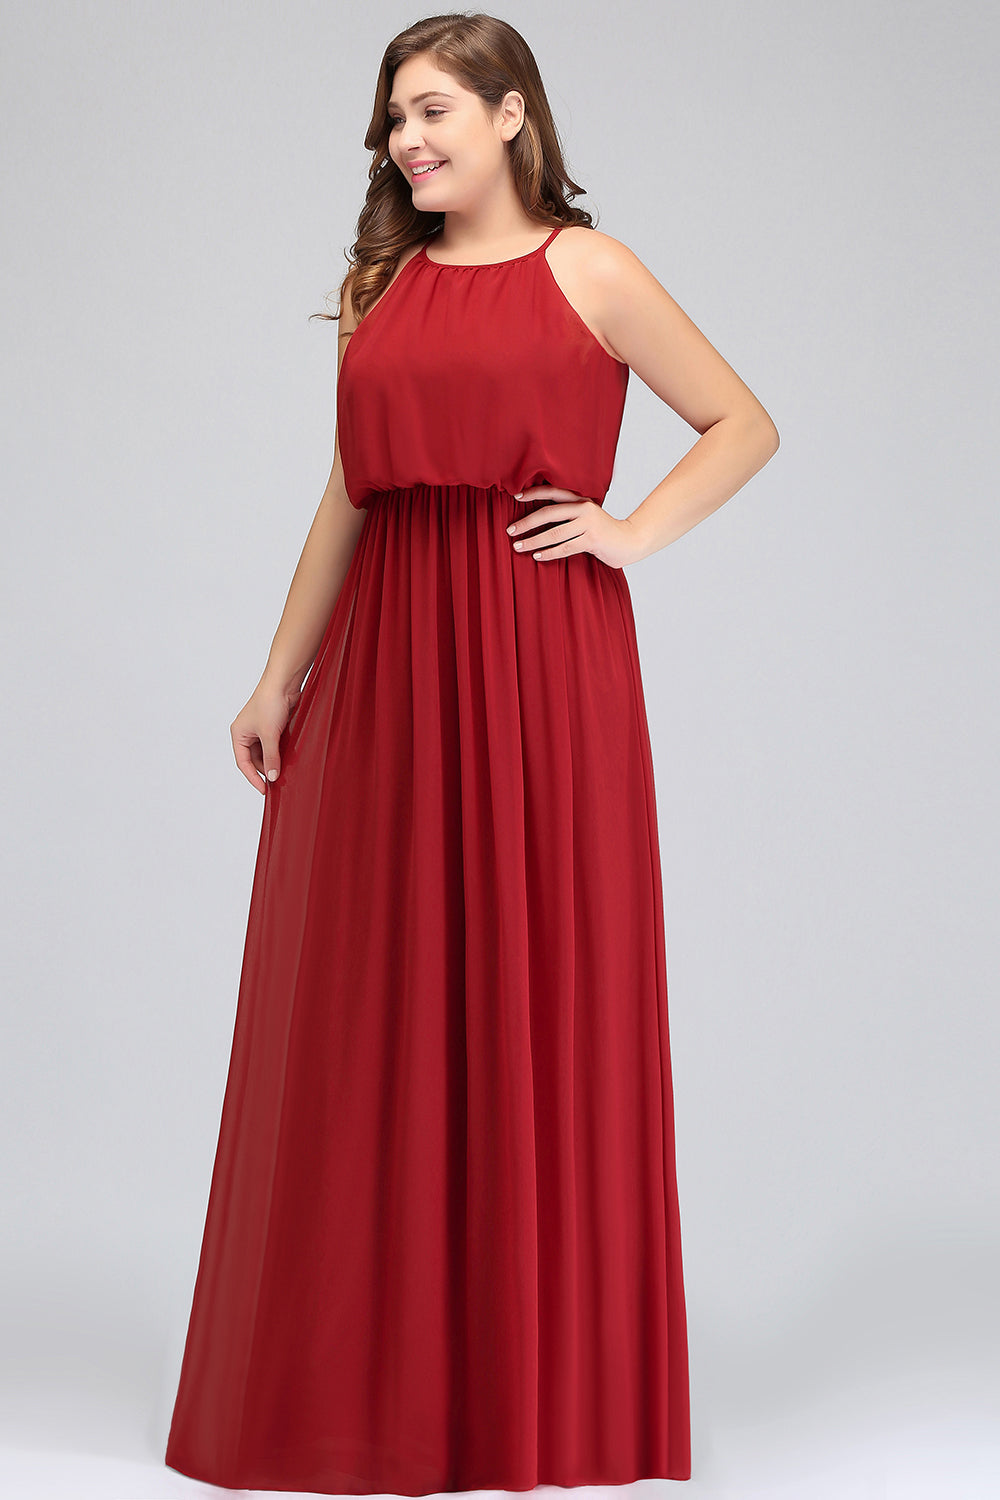 Plus Size Elegant Halter Red Chiffon Long Bridesmaid Dresses with Ruffle